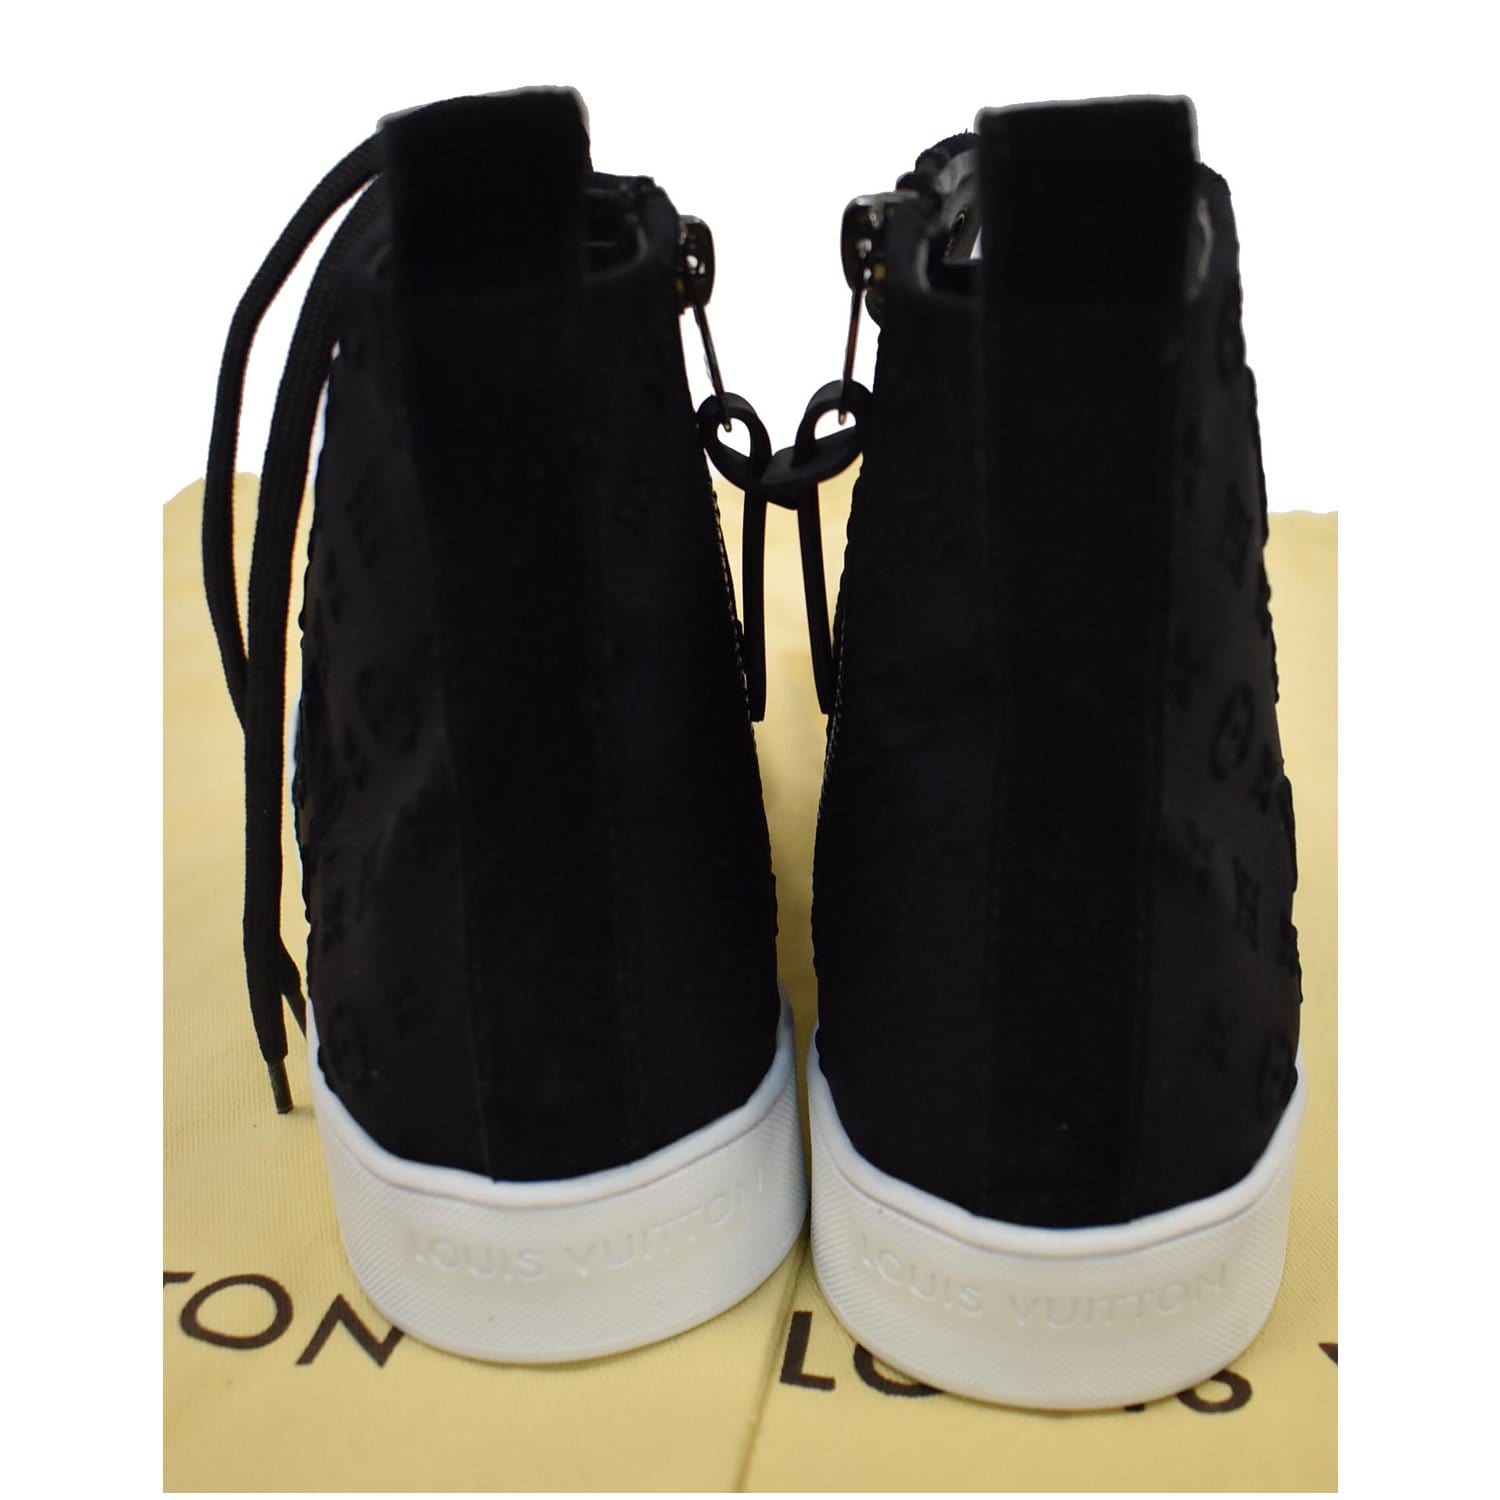 Louis Vuitton shoes in black suede, with dark Louis Vuitton